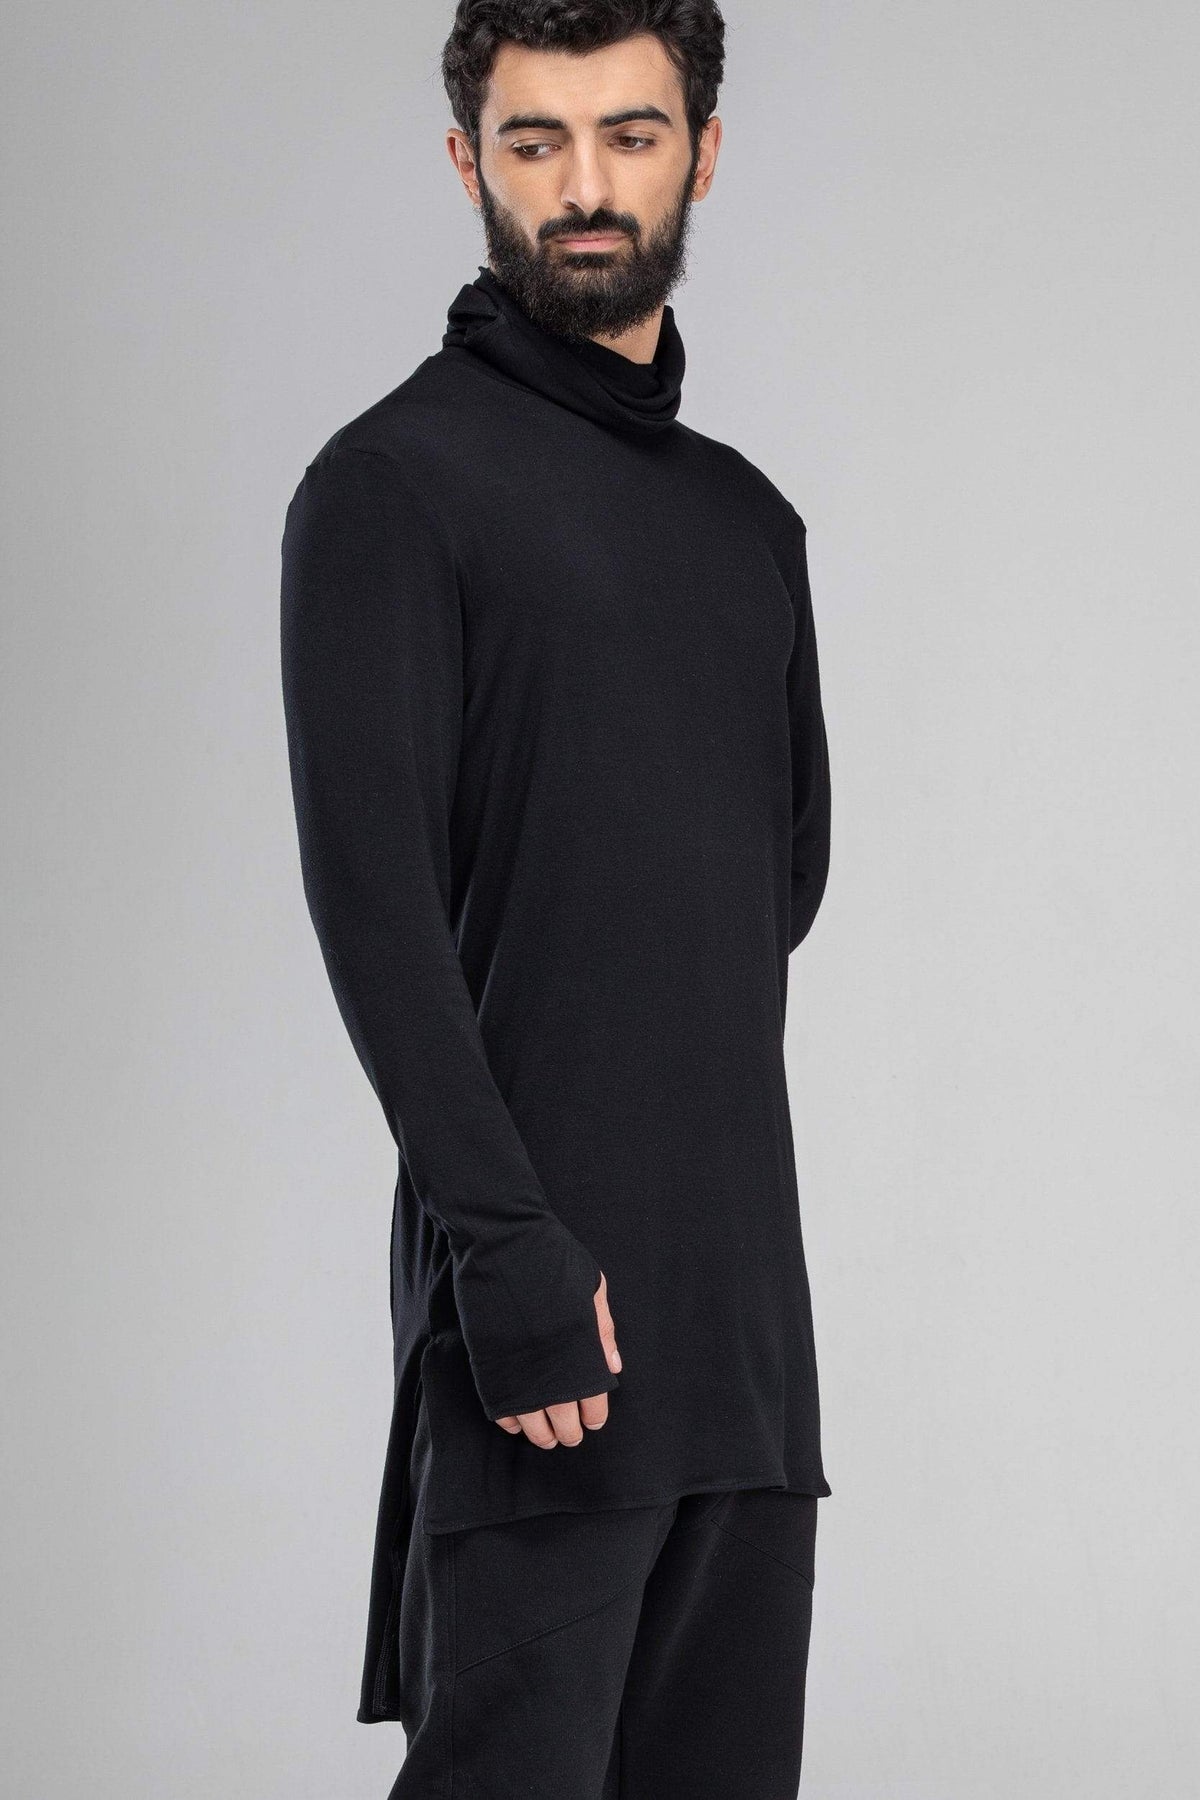 Black turtleneck sweater – MDNT45 | mdnt45.com